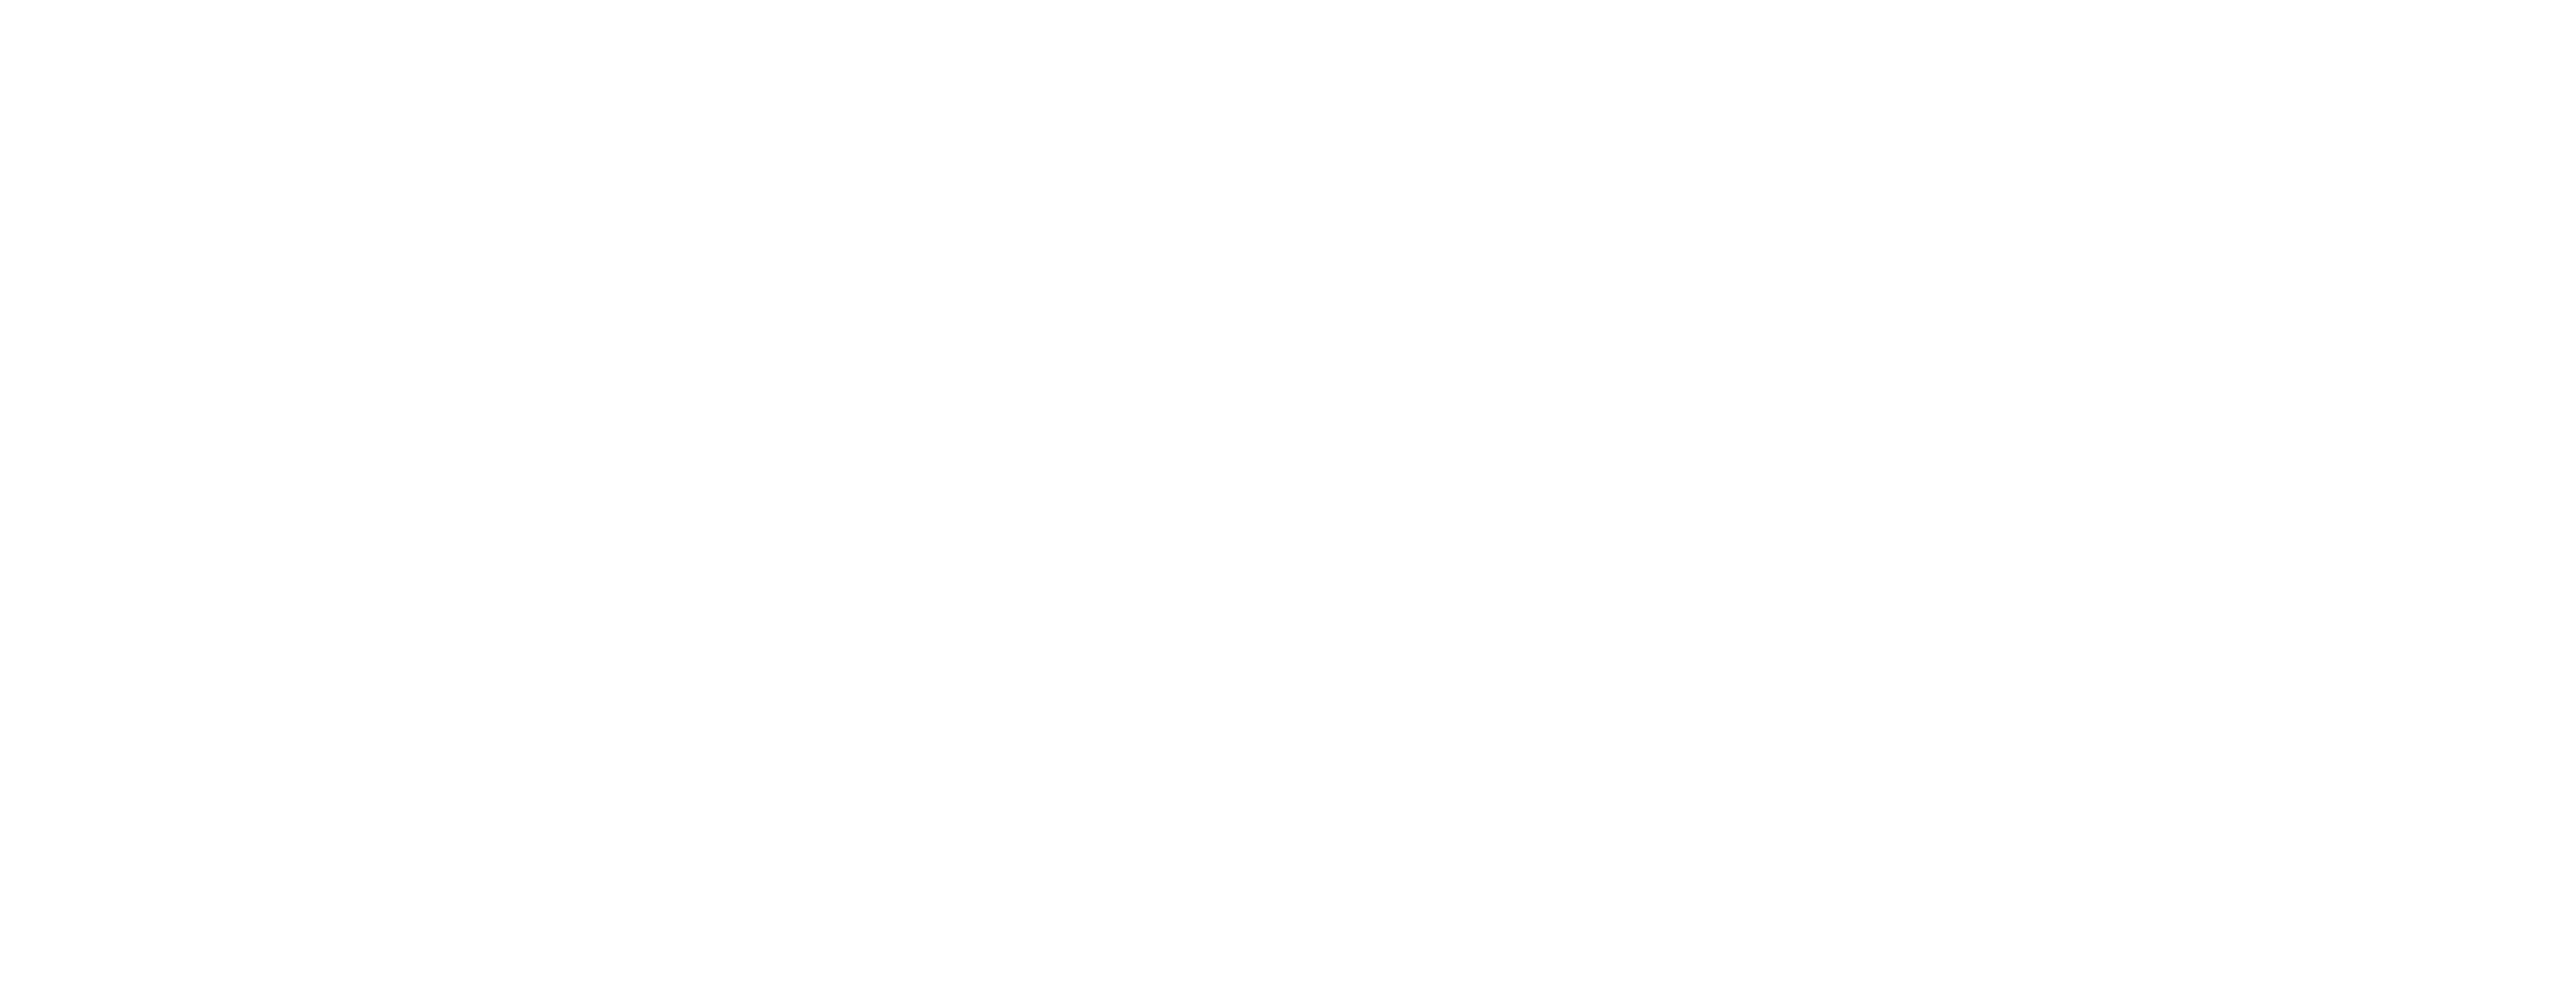 AuditTalk: Edmond Ho of Green Dot Corporation